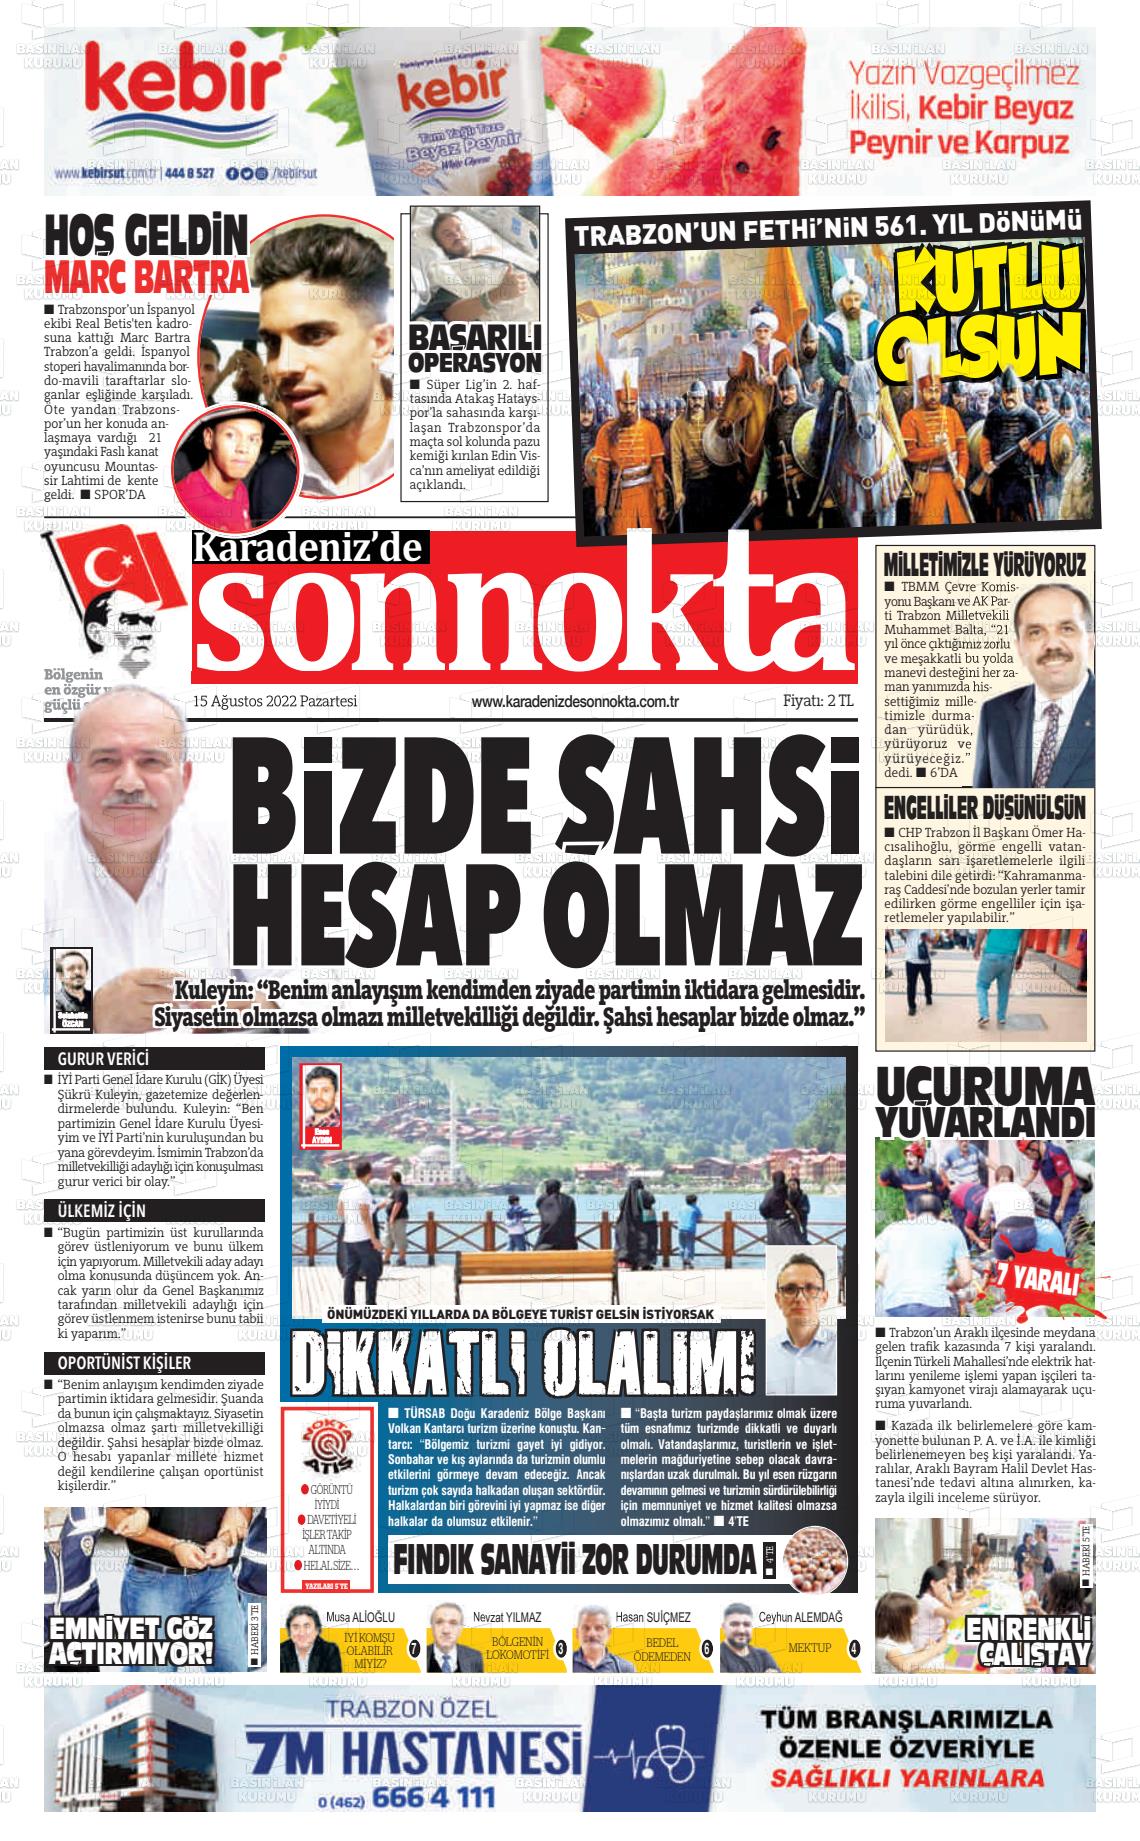 15 Ağustos 2022 Karadeniz'de Sonnokta Gazete Manşeti